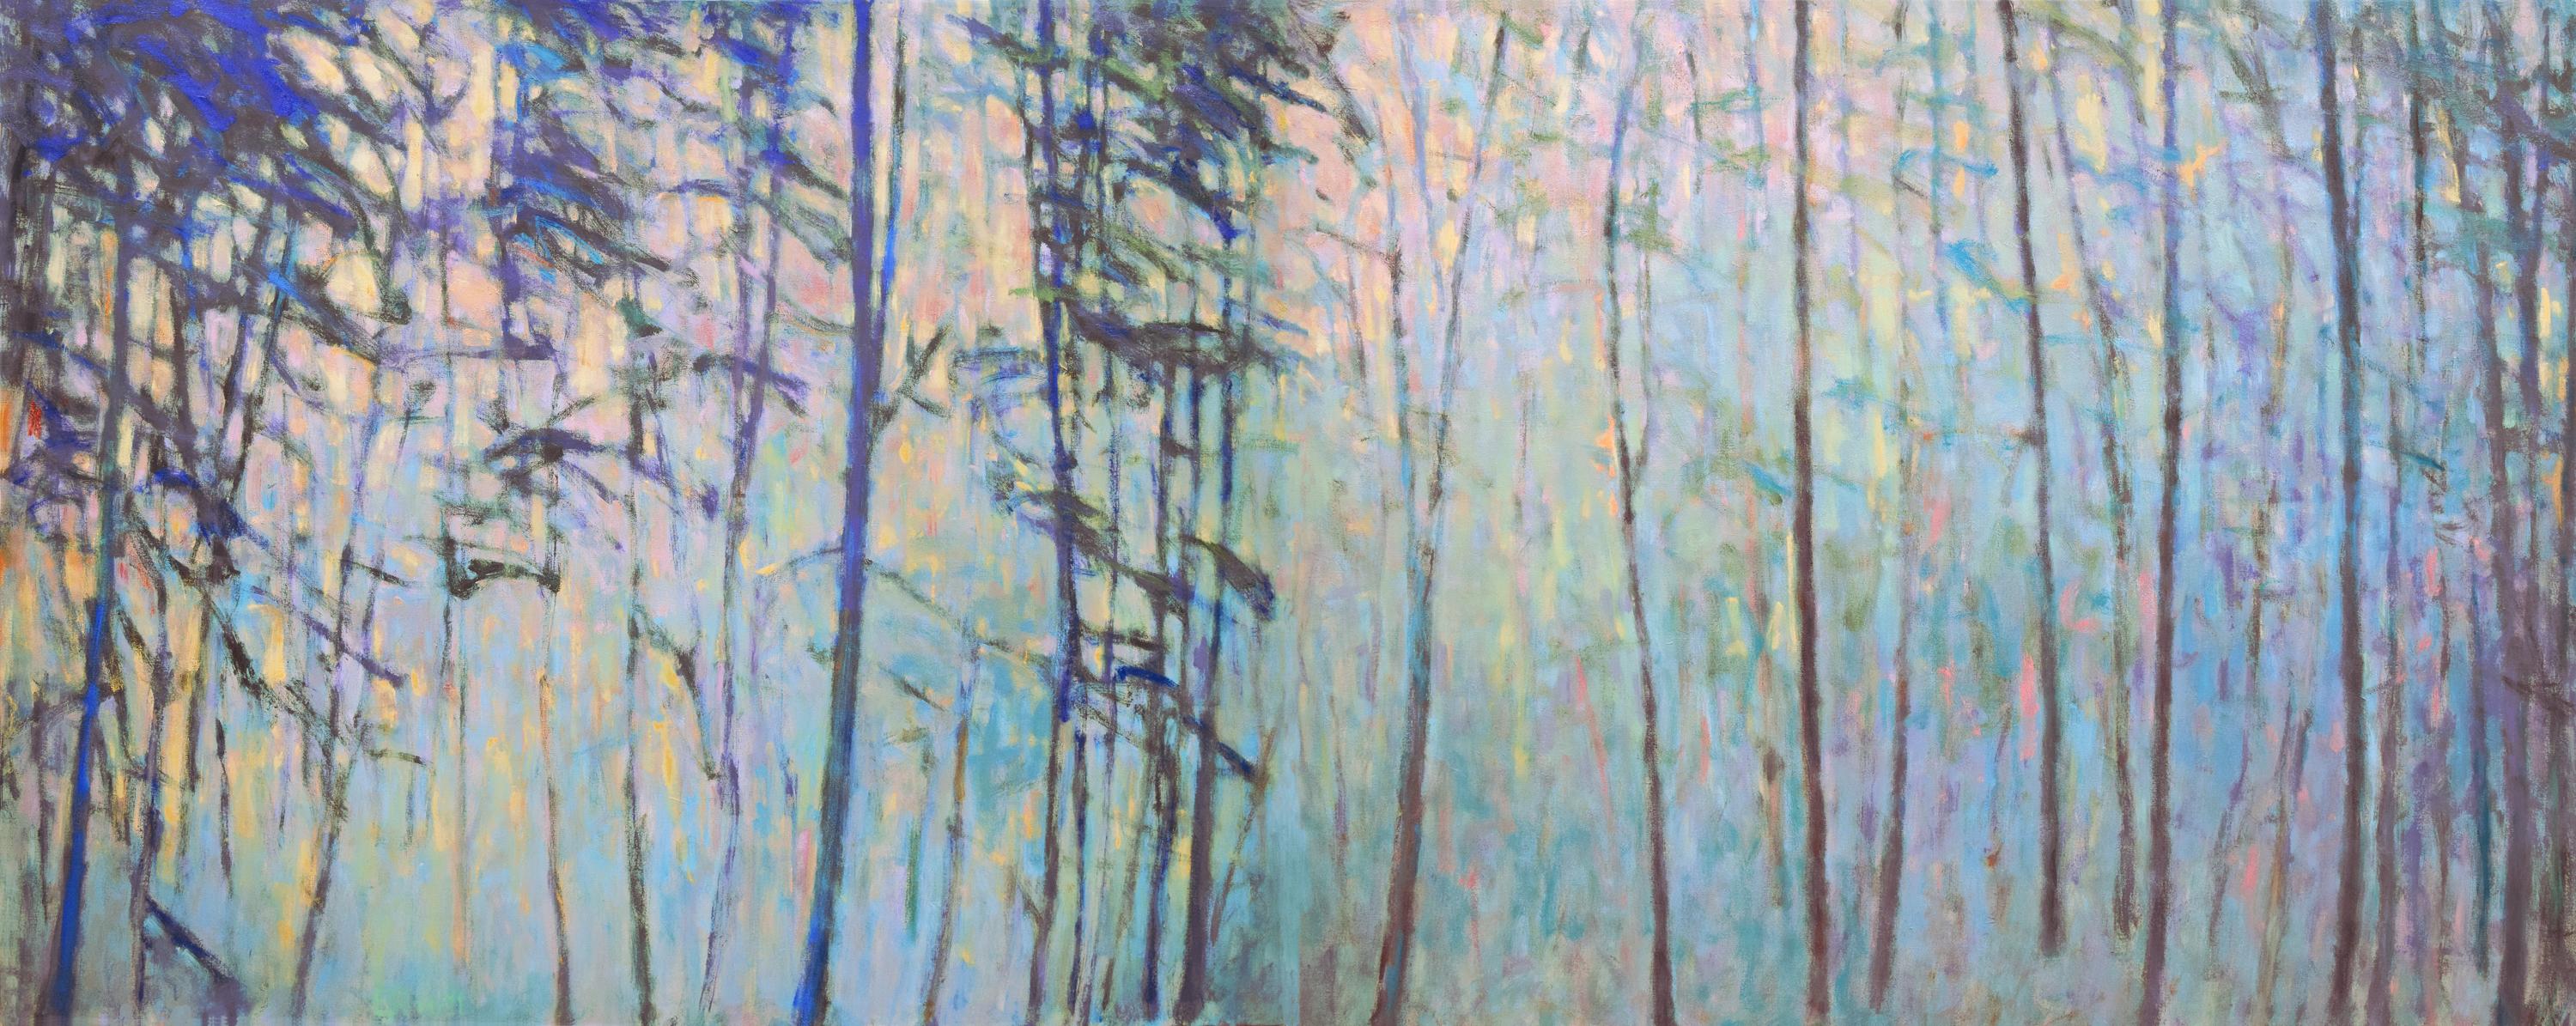 Ken Elliott Landscape Painting - Forest Sequence I (Diptych)